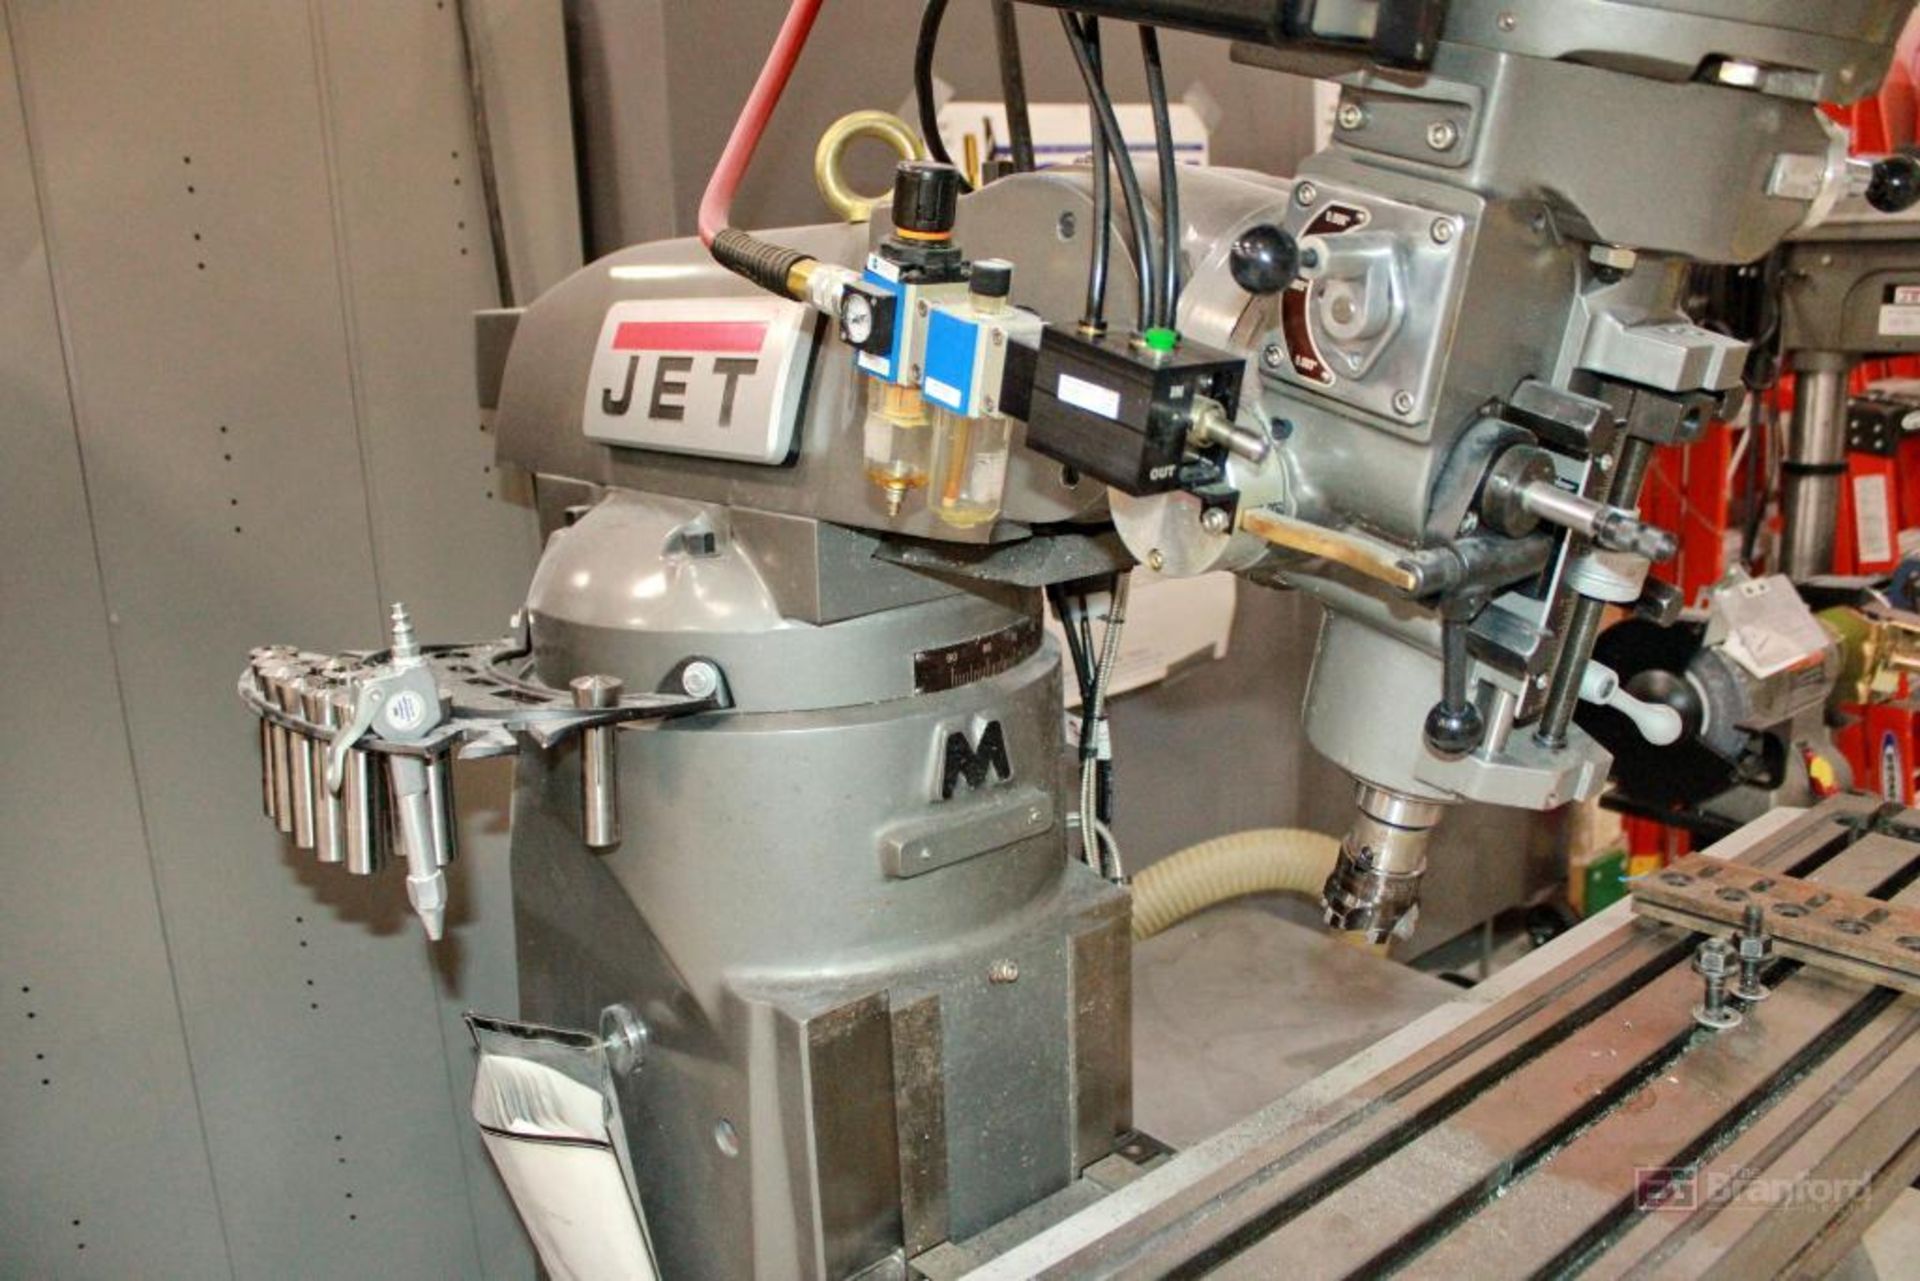 Jet JTM-4VS Turret Milling Machine - Image 5 of 8